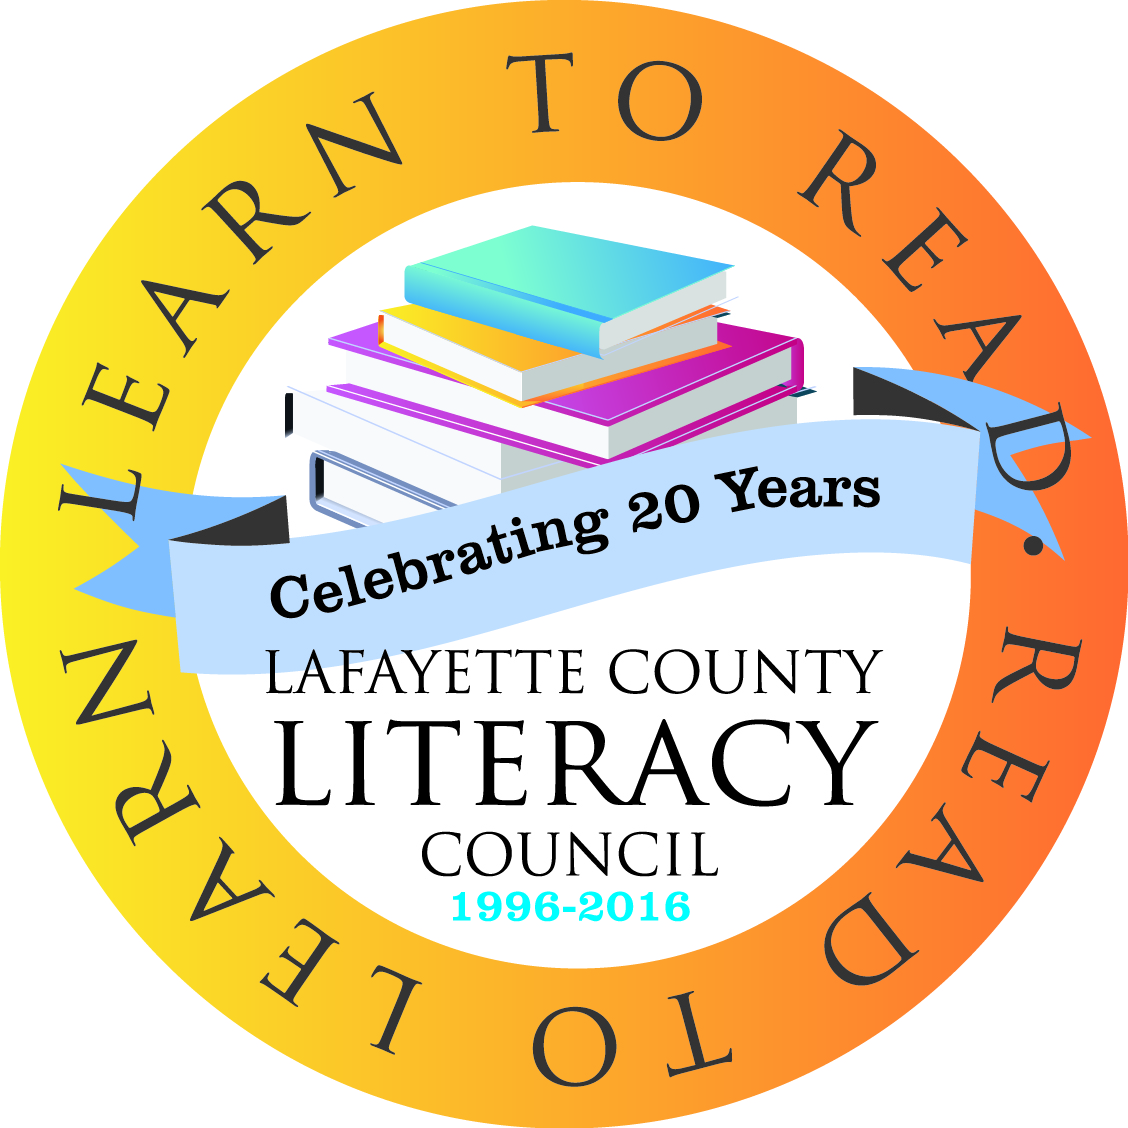 Lafayette County Literacy Council logo